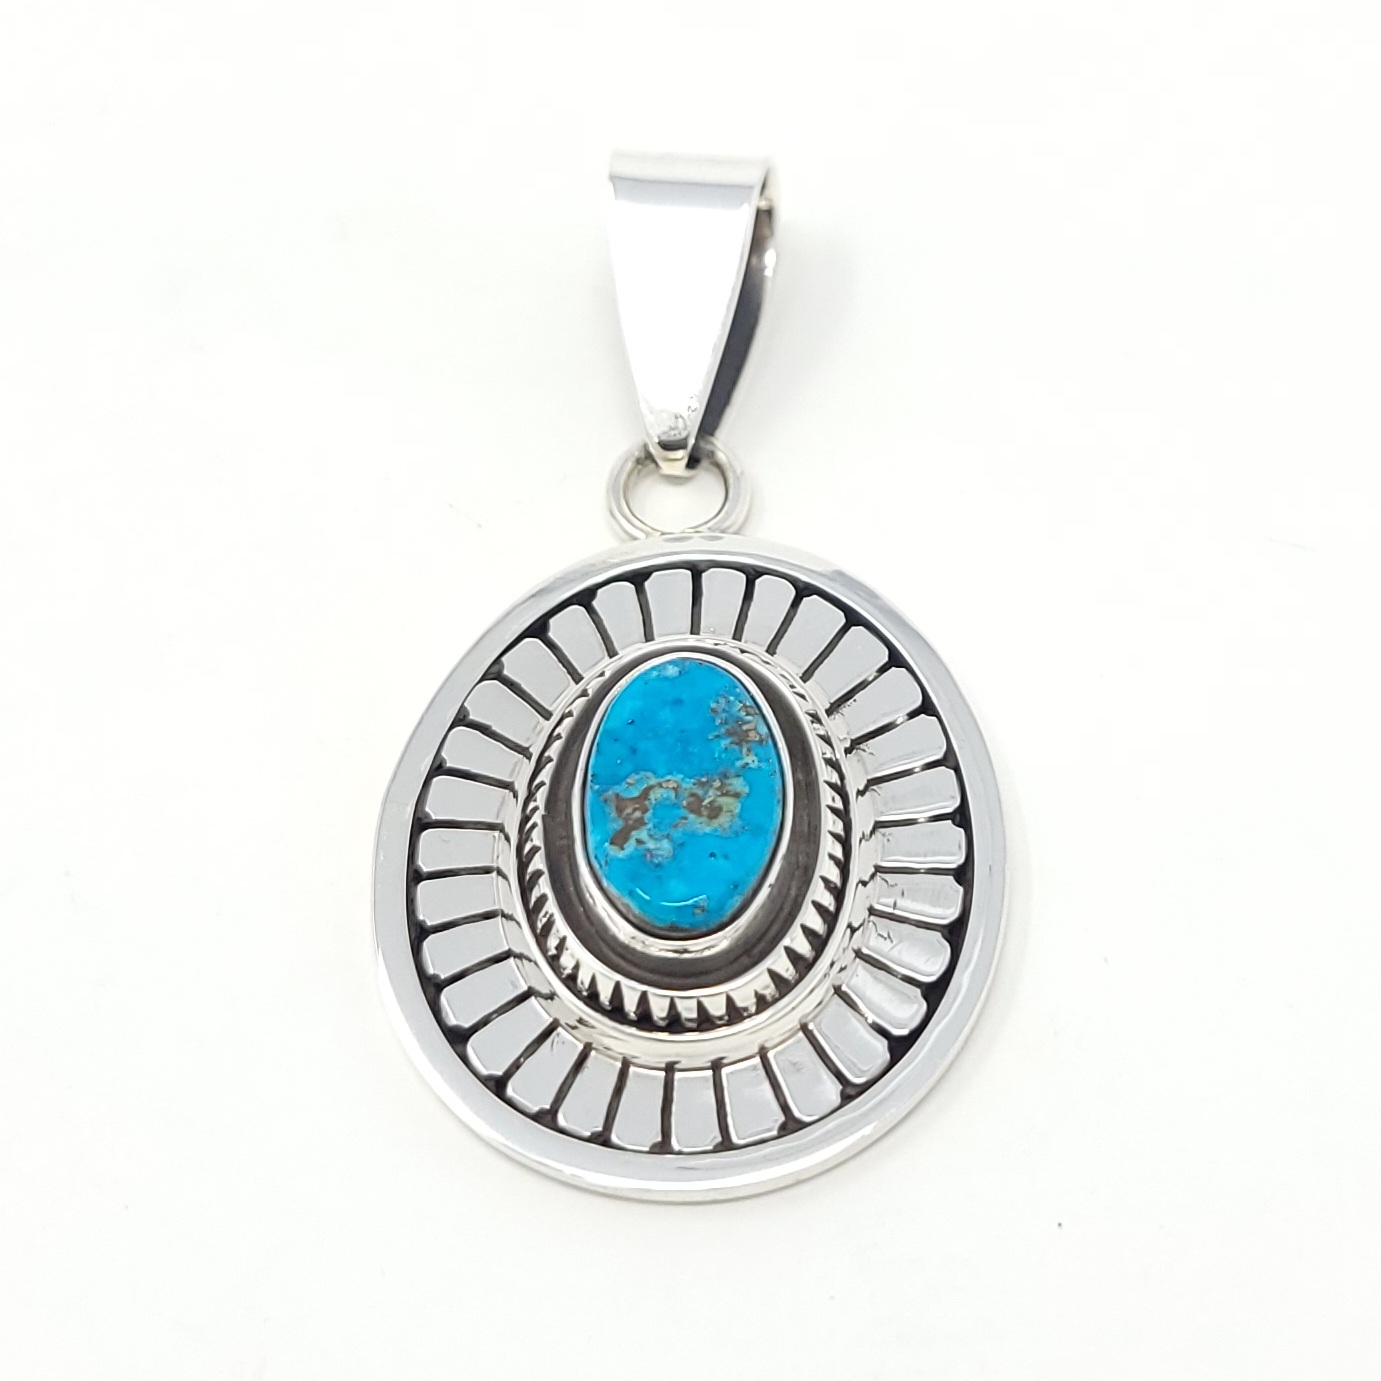 Leonard Nez Navajo Handmade Sterling Silver Pendant Blue Candelaria Turquoise